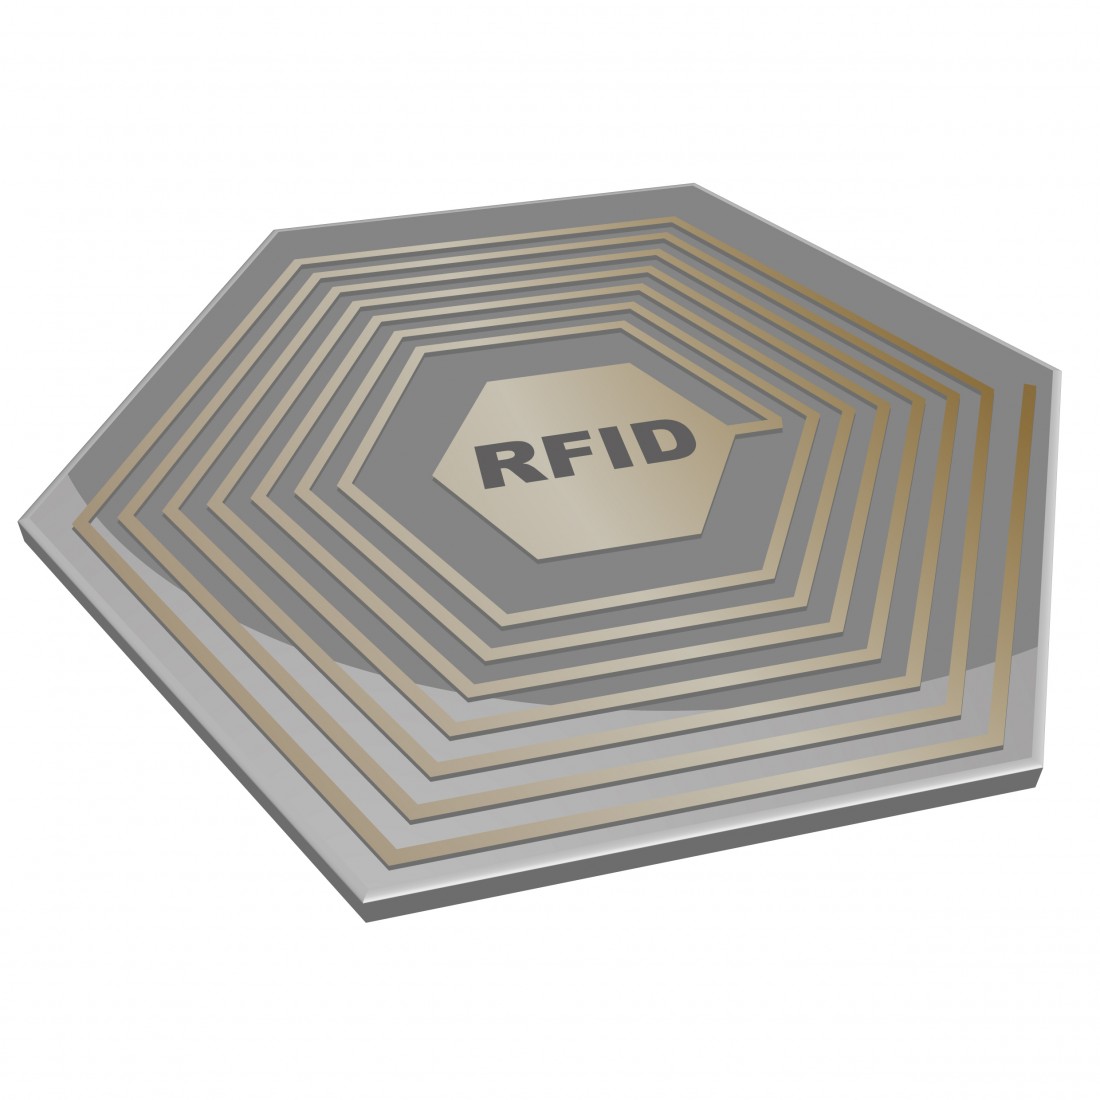 RFID - supply chain technology